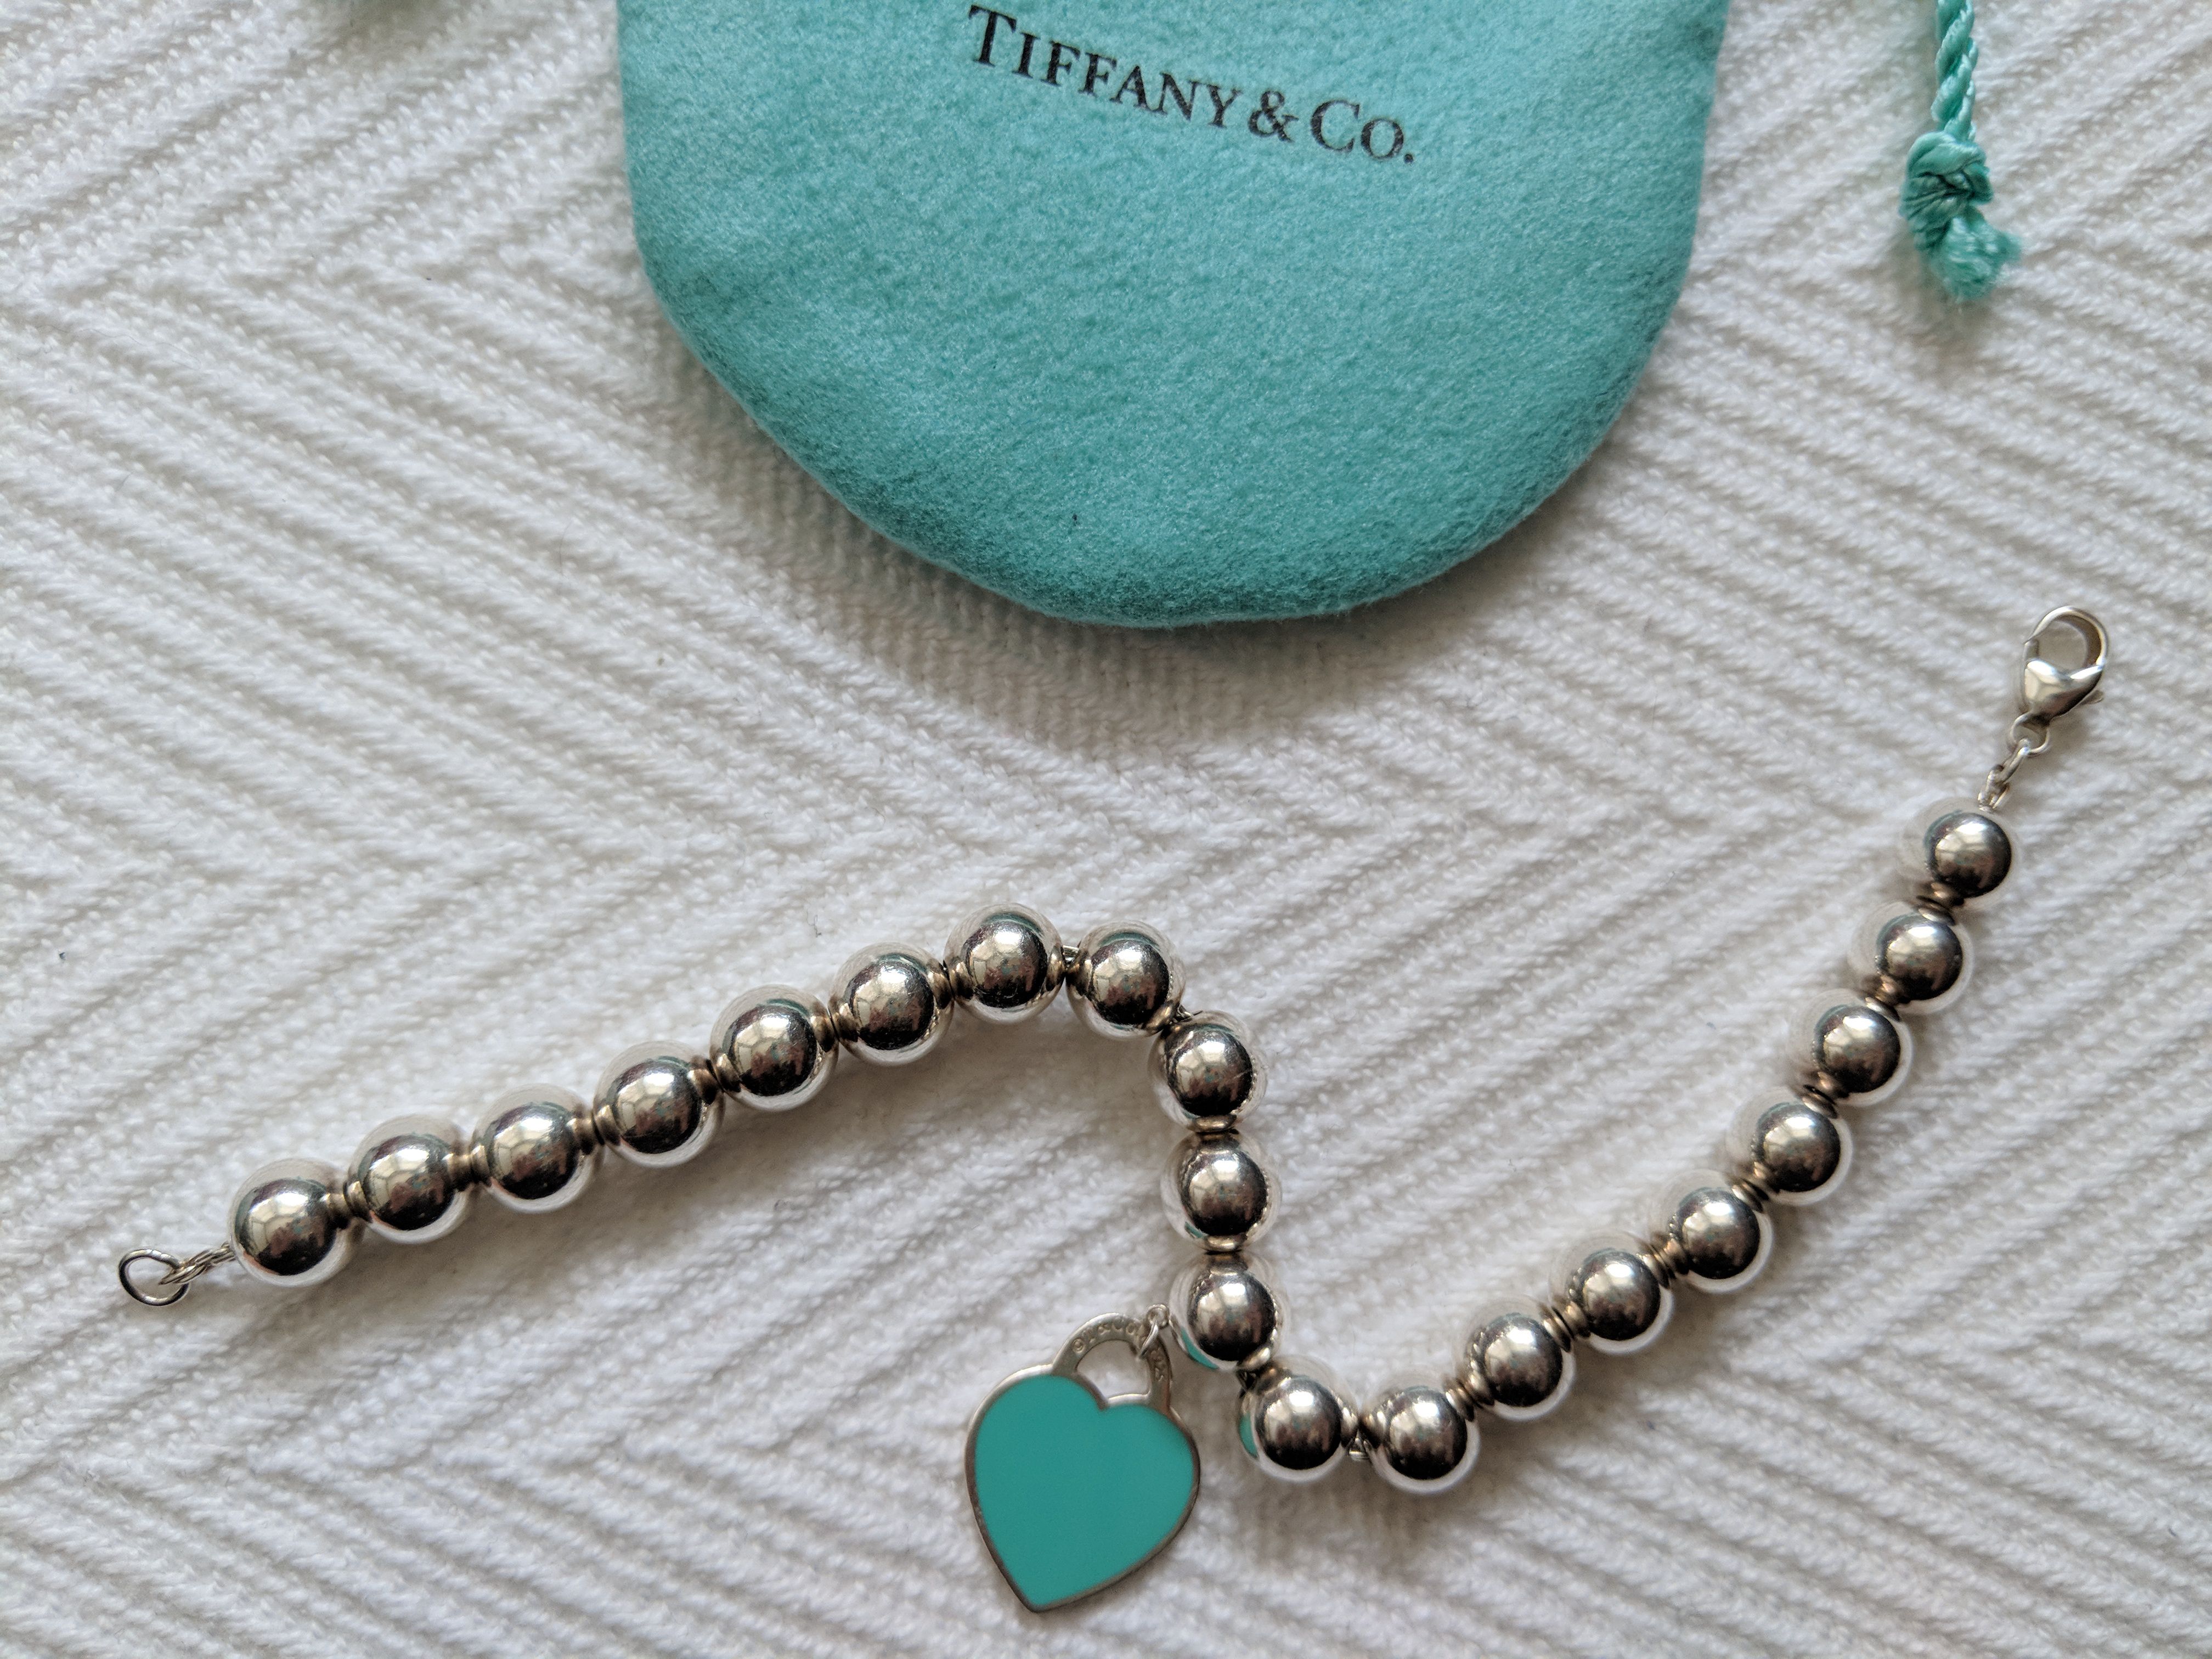 Original Tiffany silver bracelet